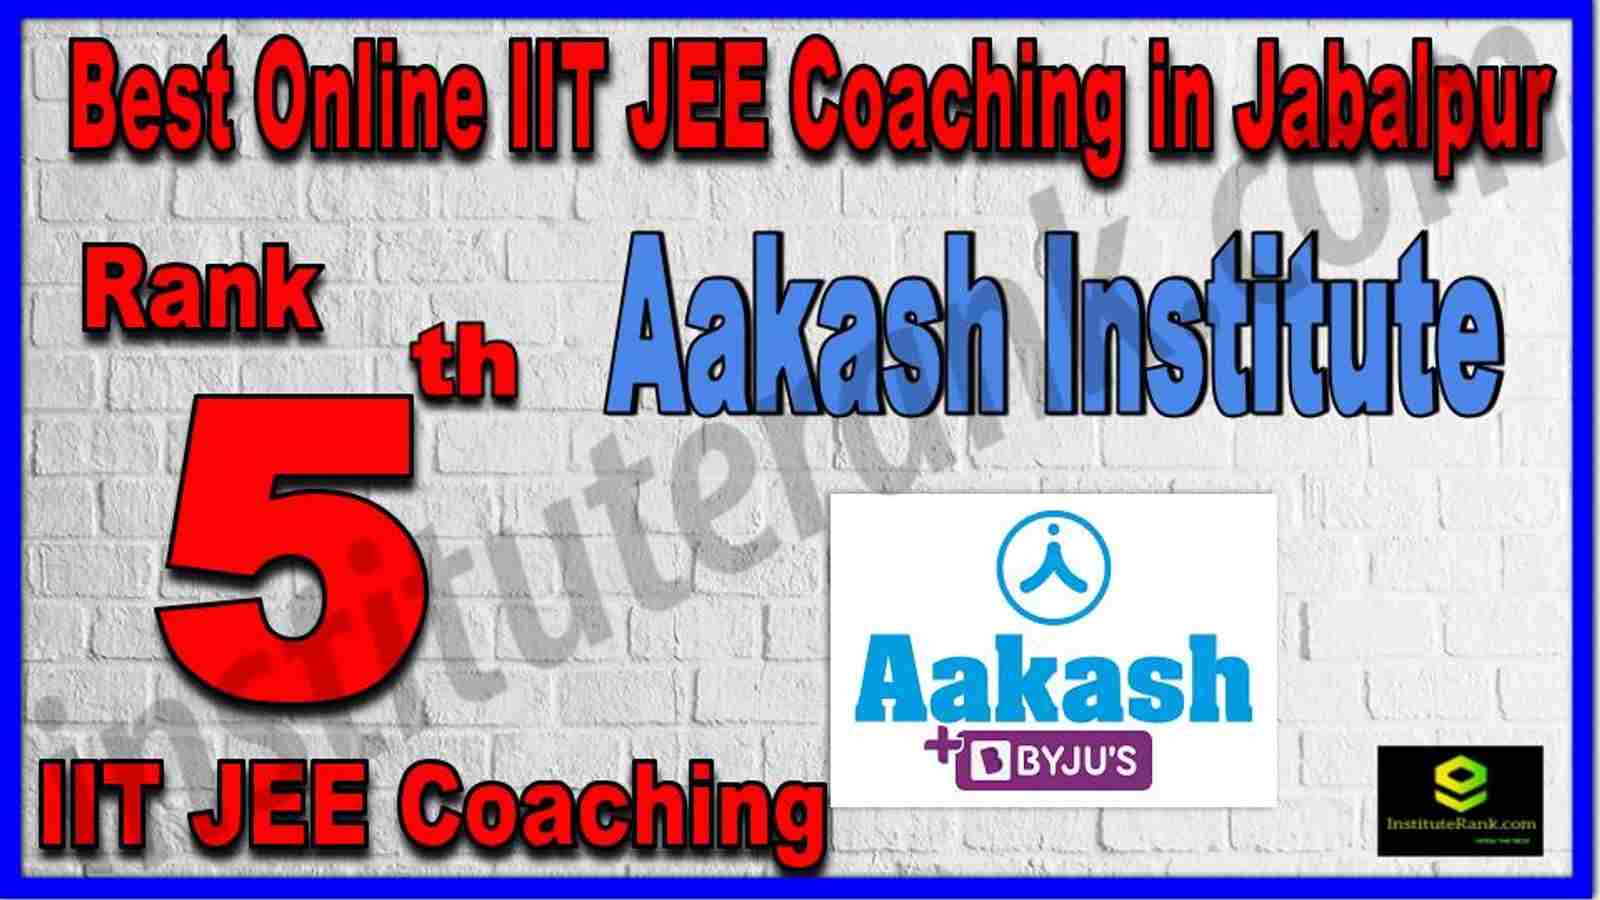 Rank 5th Best Online IIT JEE Coaching in Jabalpur